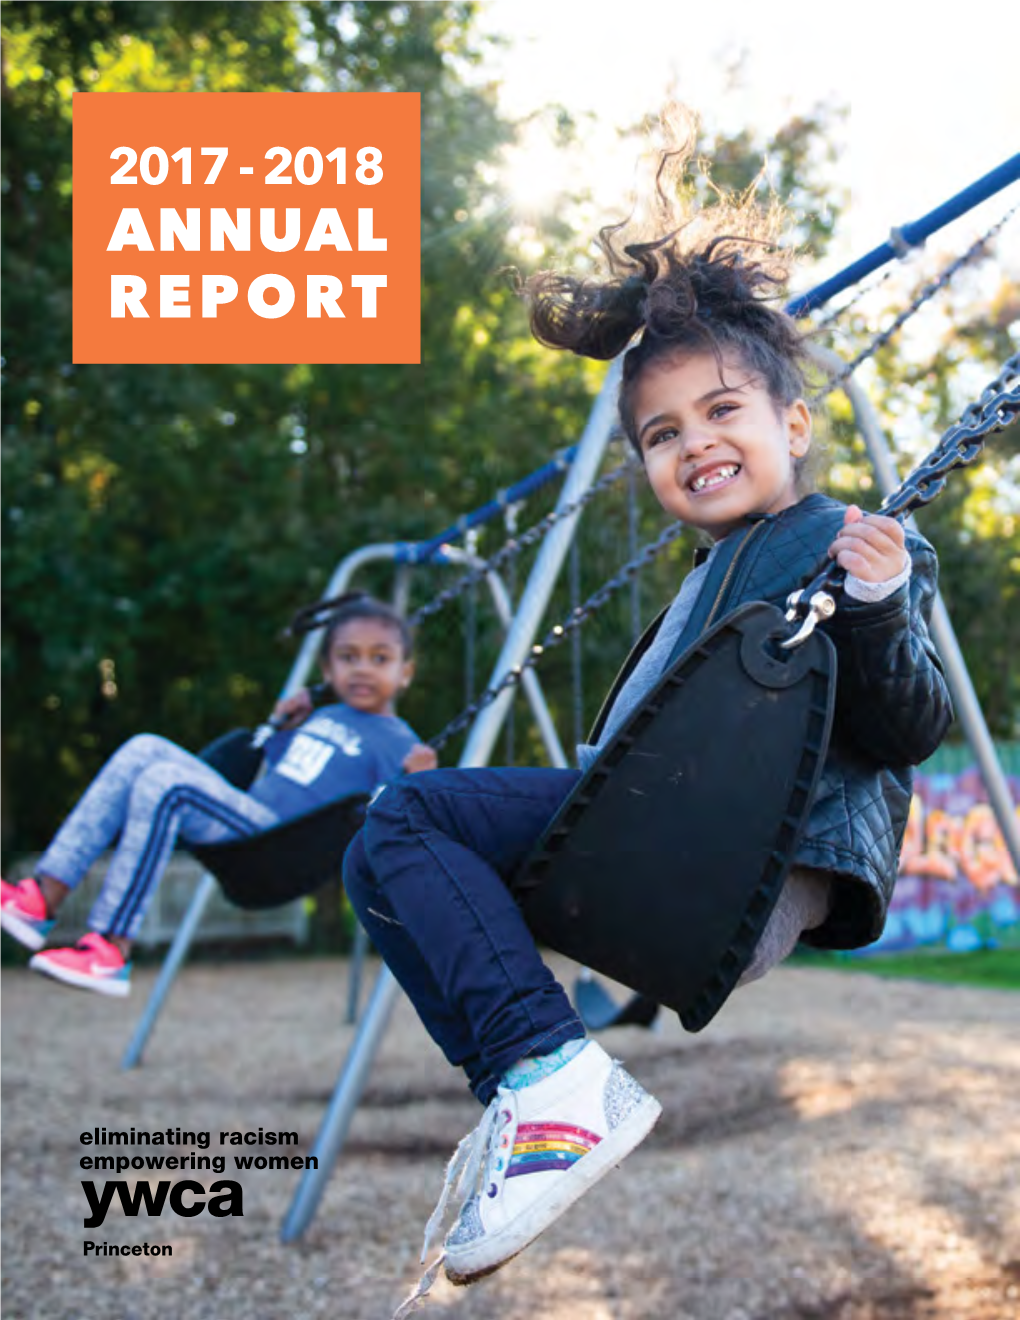 2017 - 2018 Annual Report